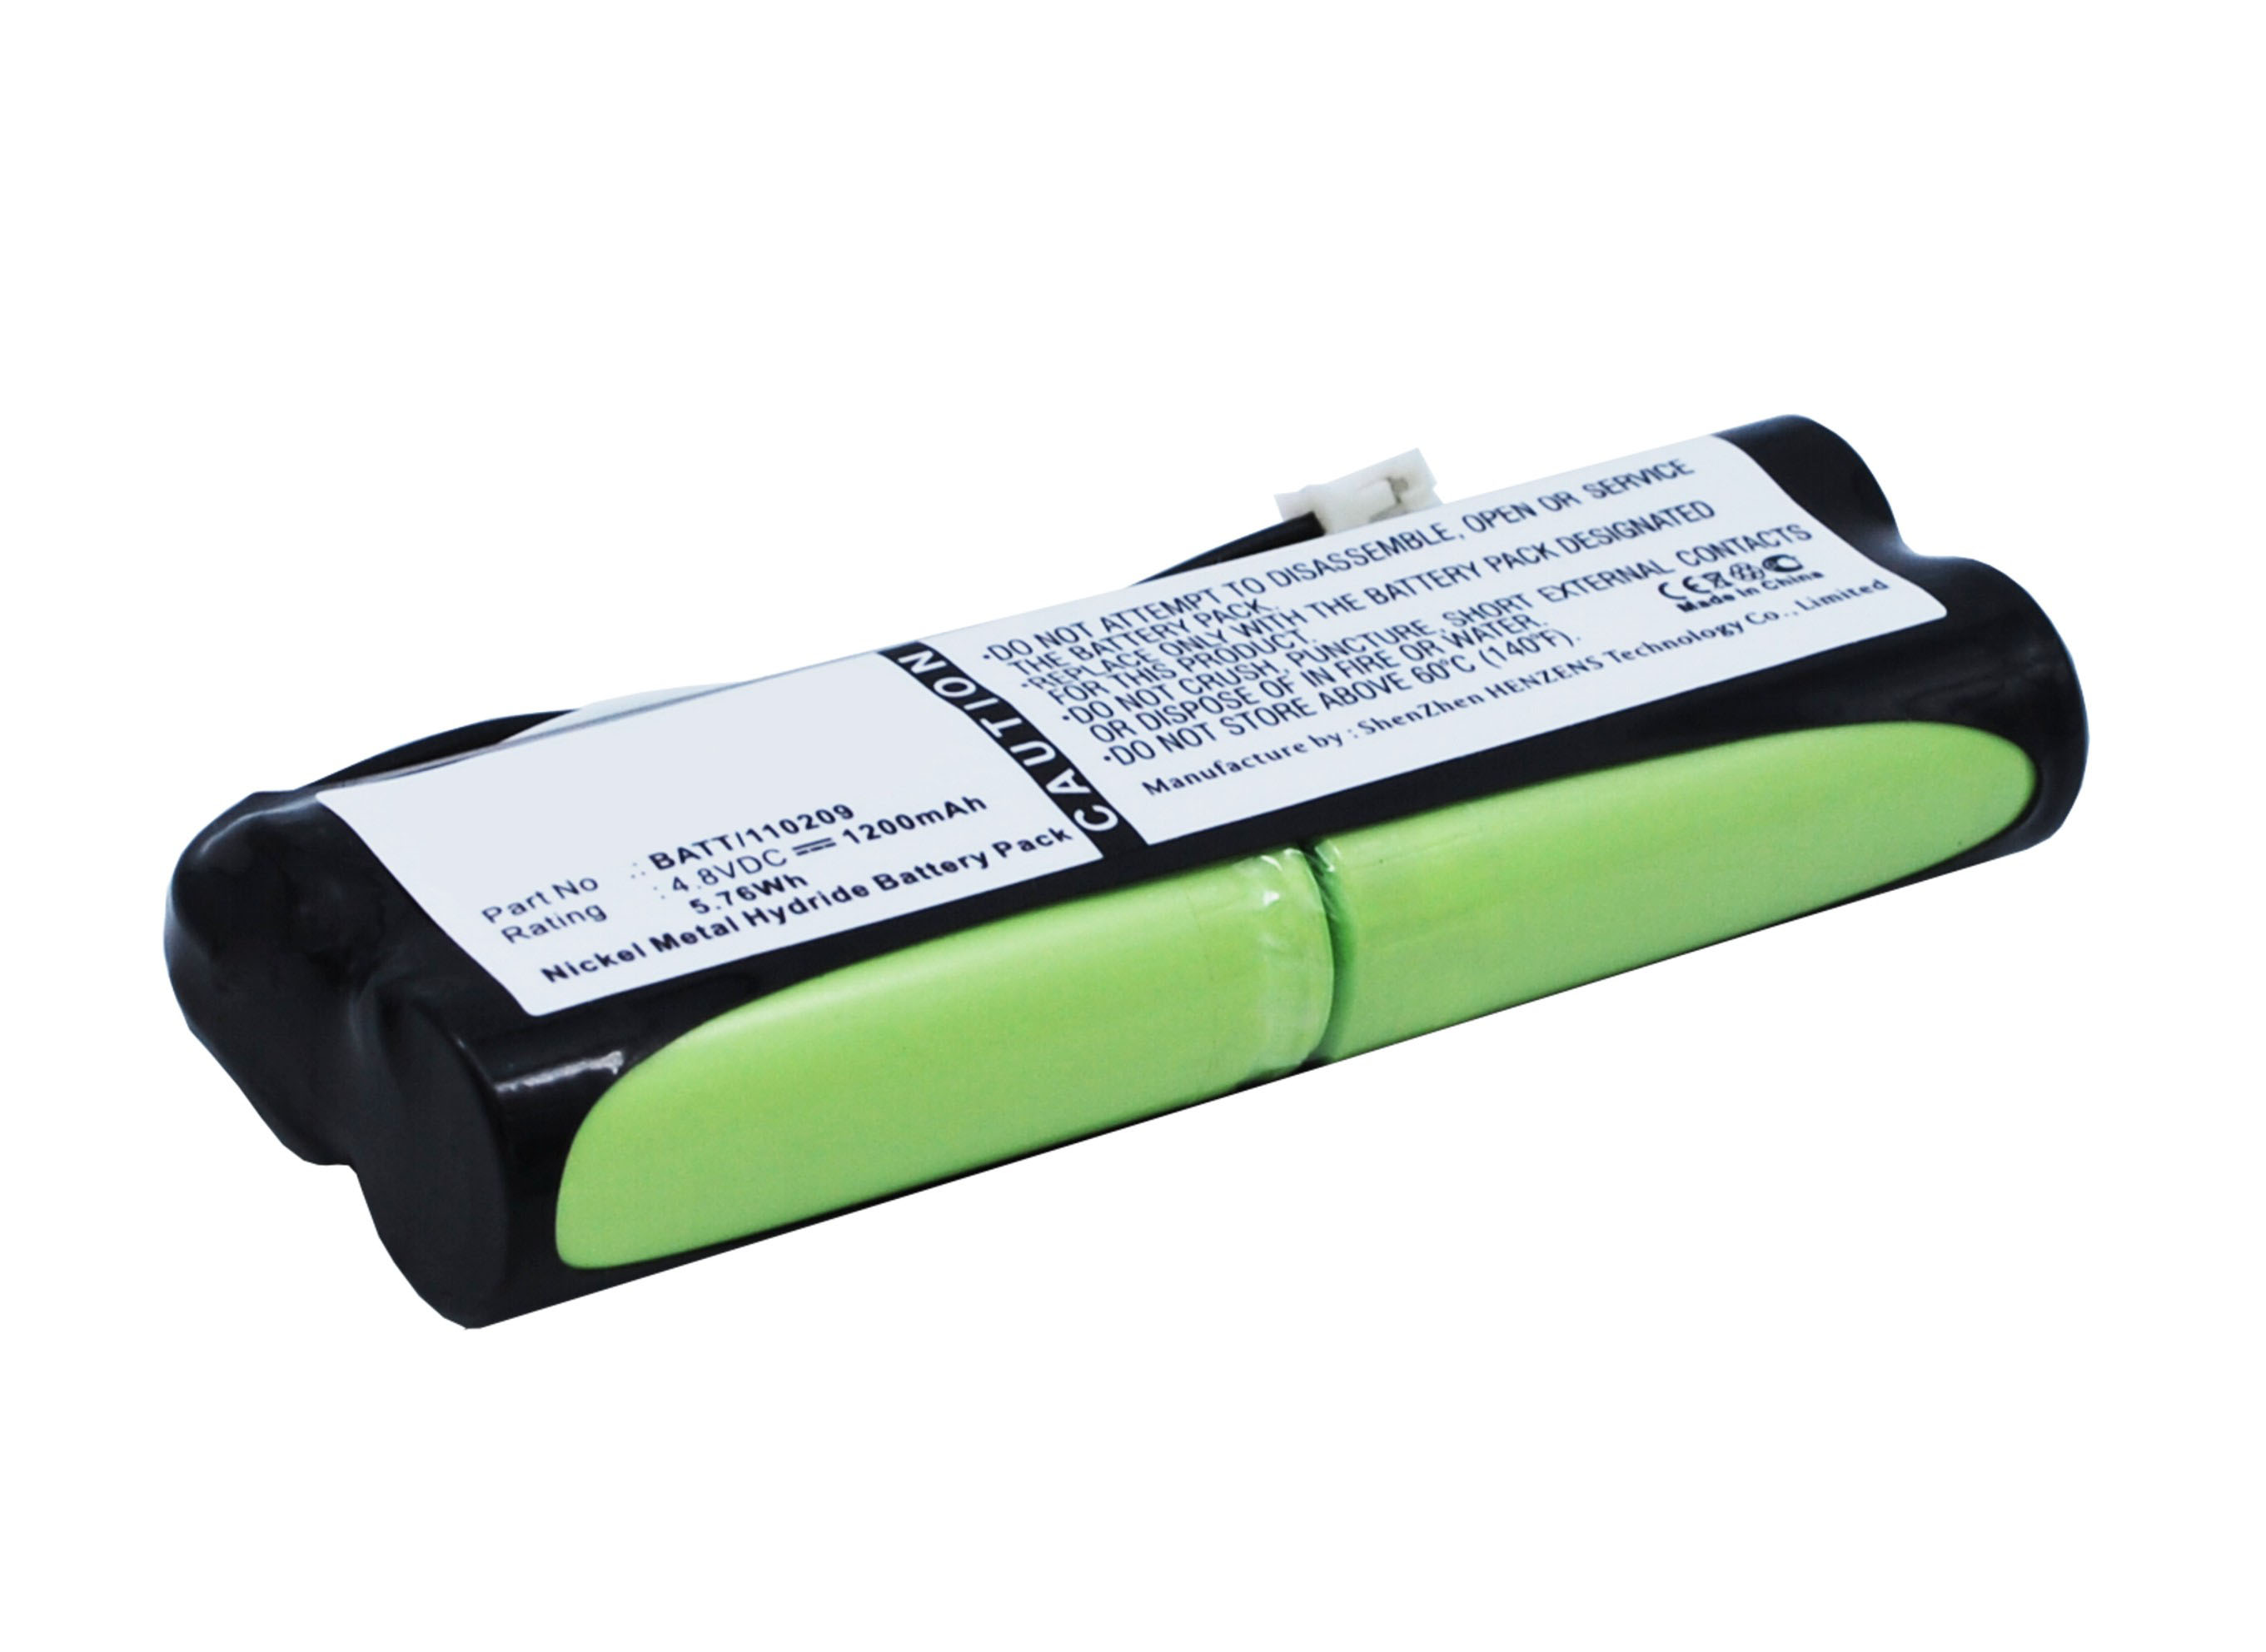 Synergy Digital Medical Battery, Compatible with Fresenius 120209, BATT/110209 Medical Battery (4.8V, Ni-MH, 1200mAh)